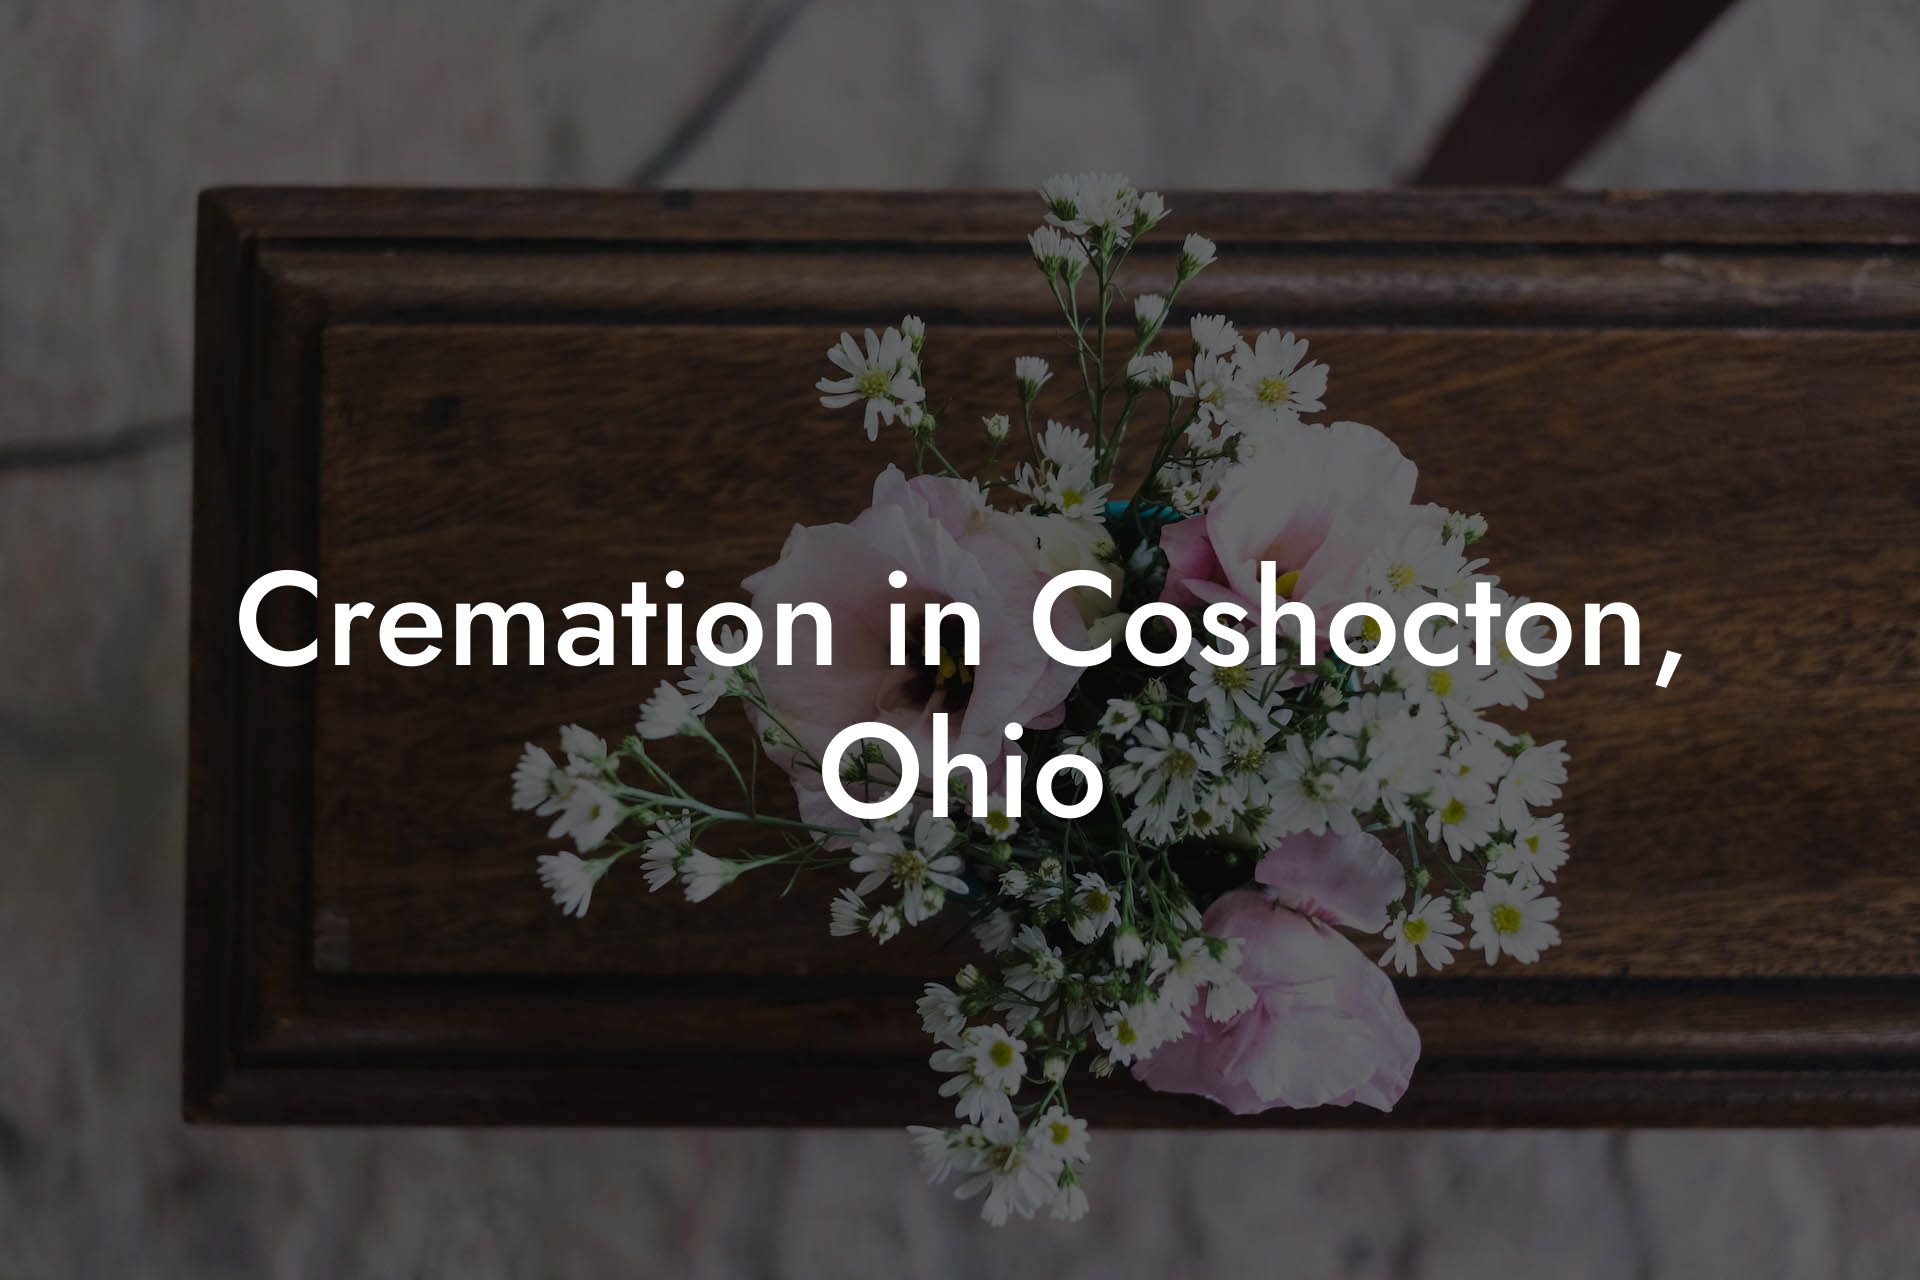 Cremation in Coshocton, Ohio